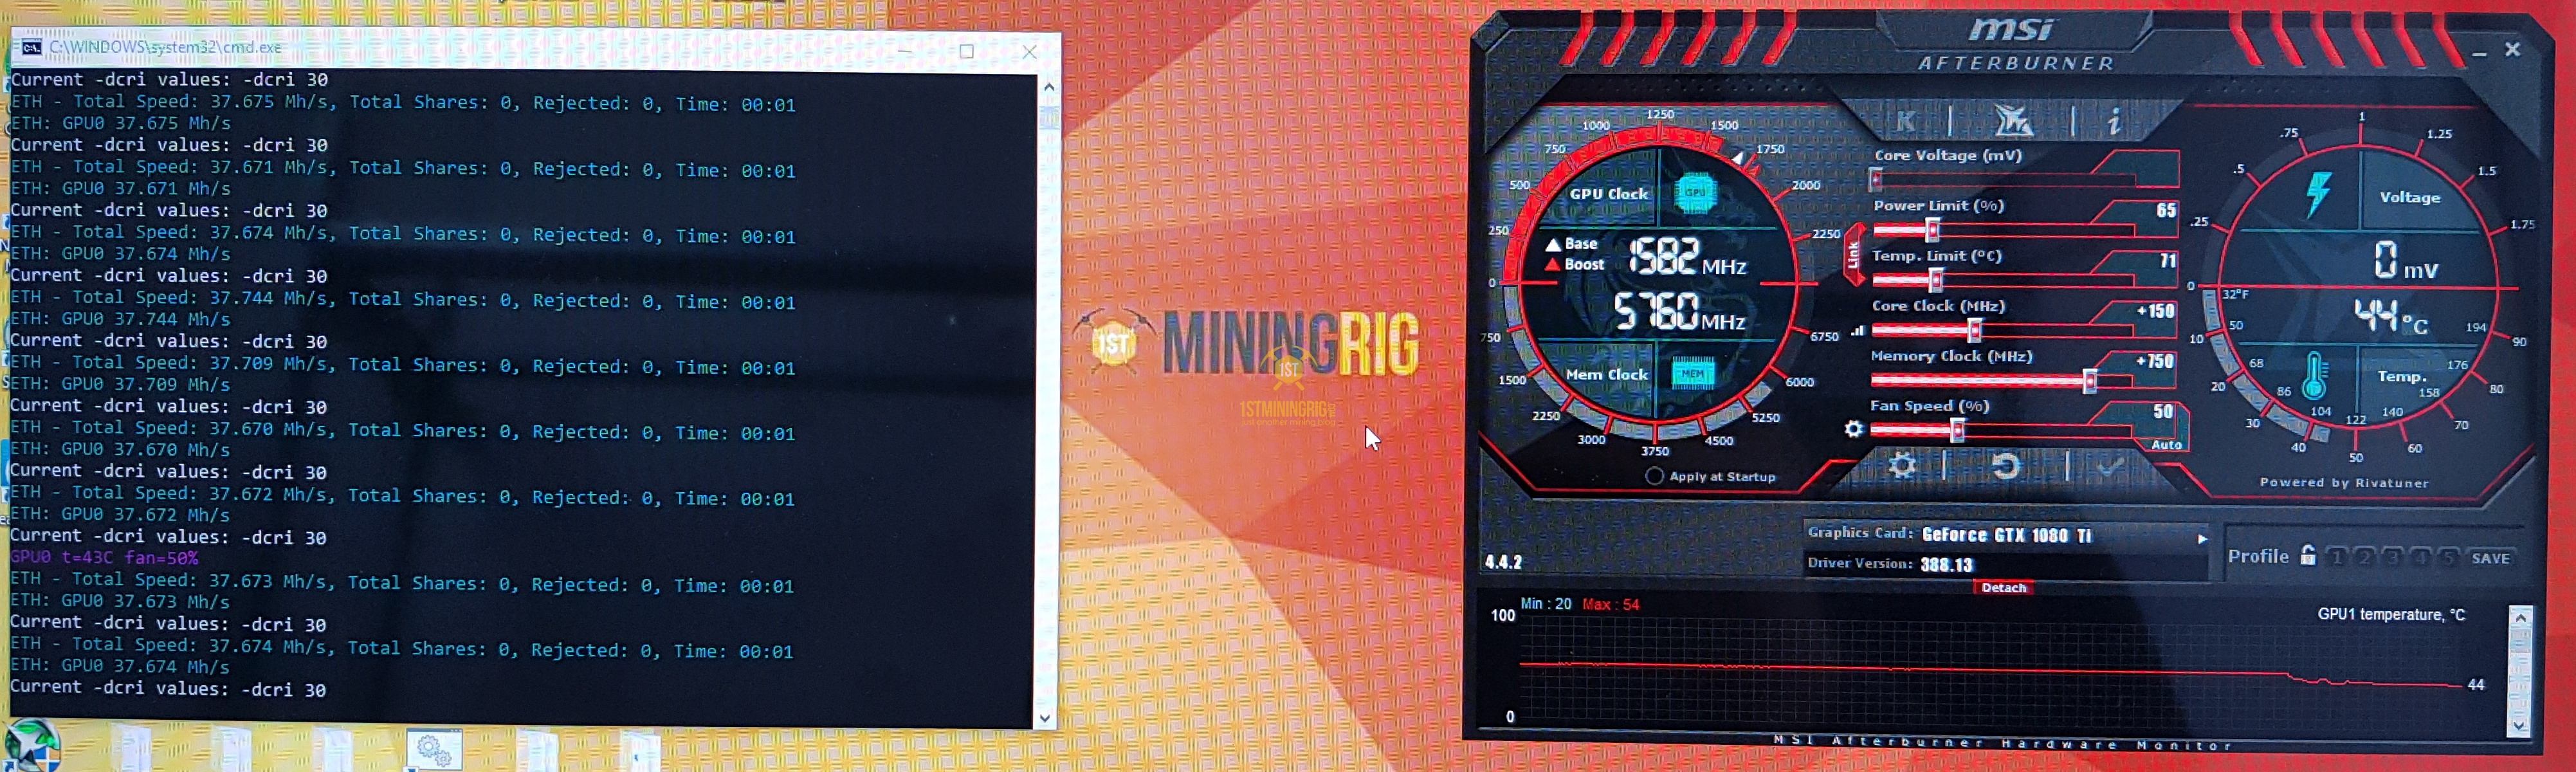 Increase GTX / Ti mining performance by 50%! | NiceHash